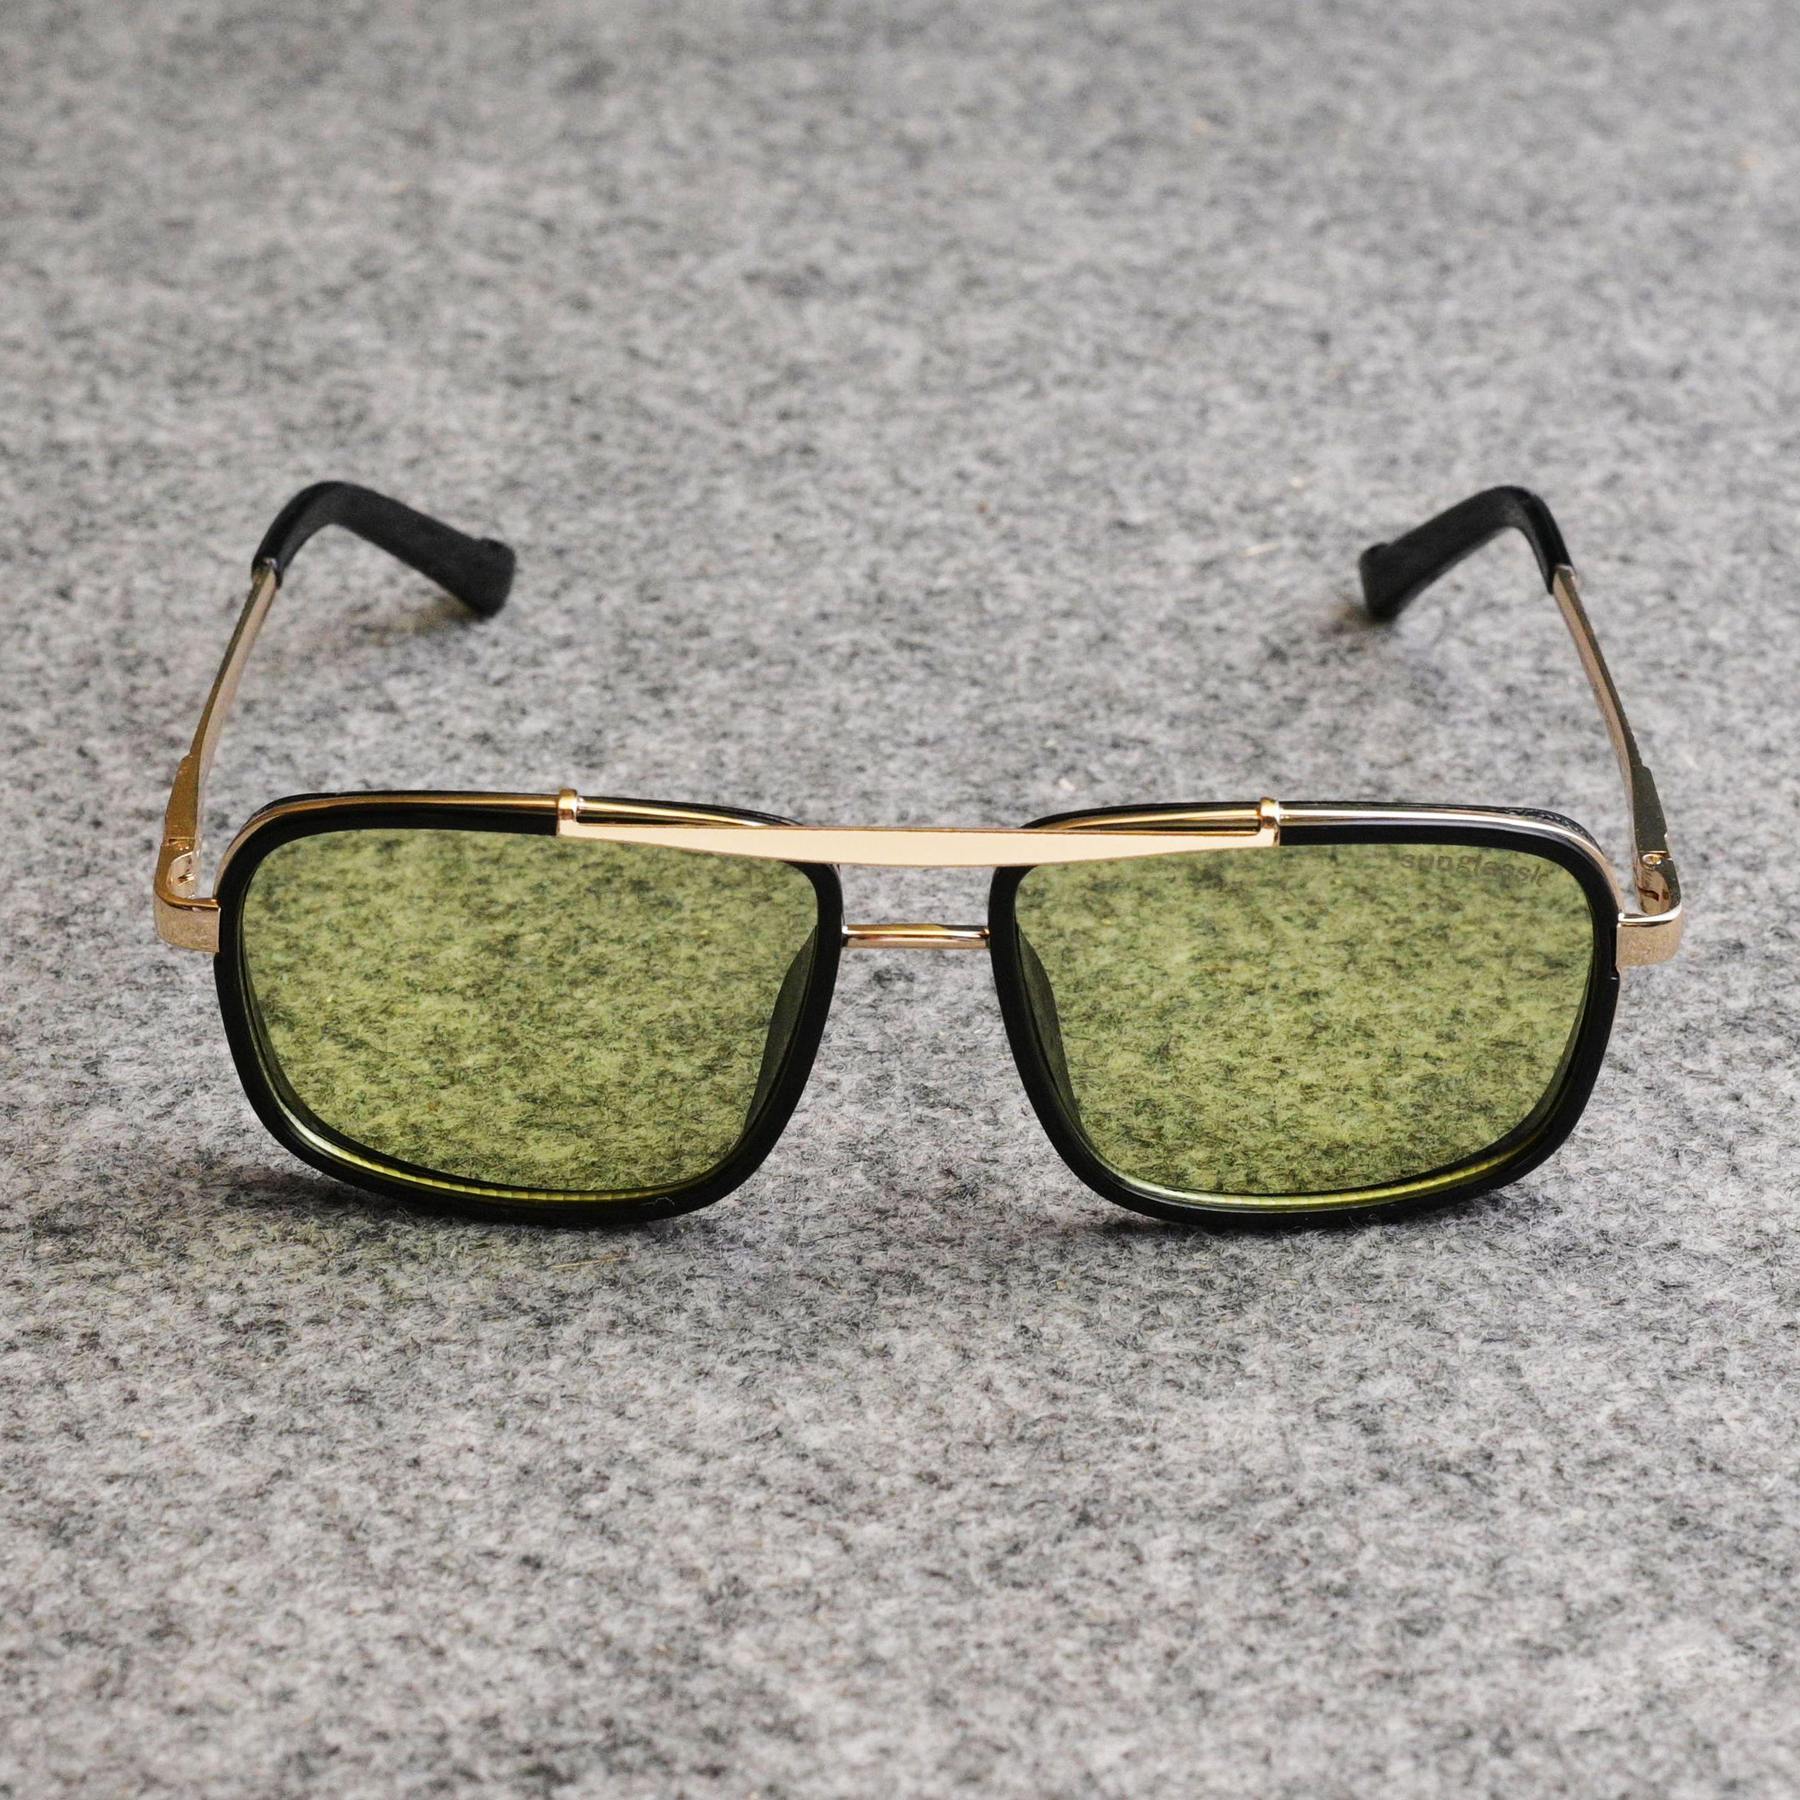 Scarface Sunglasses: The New Luxury Standard